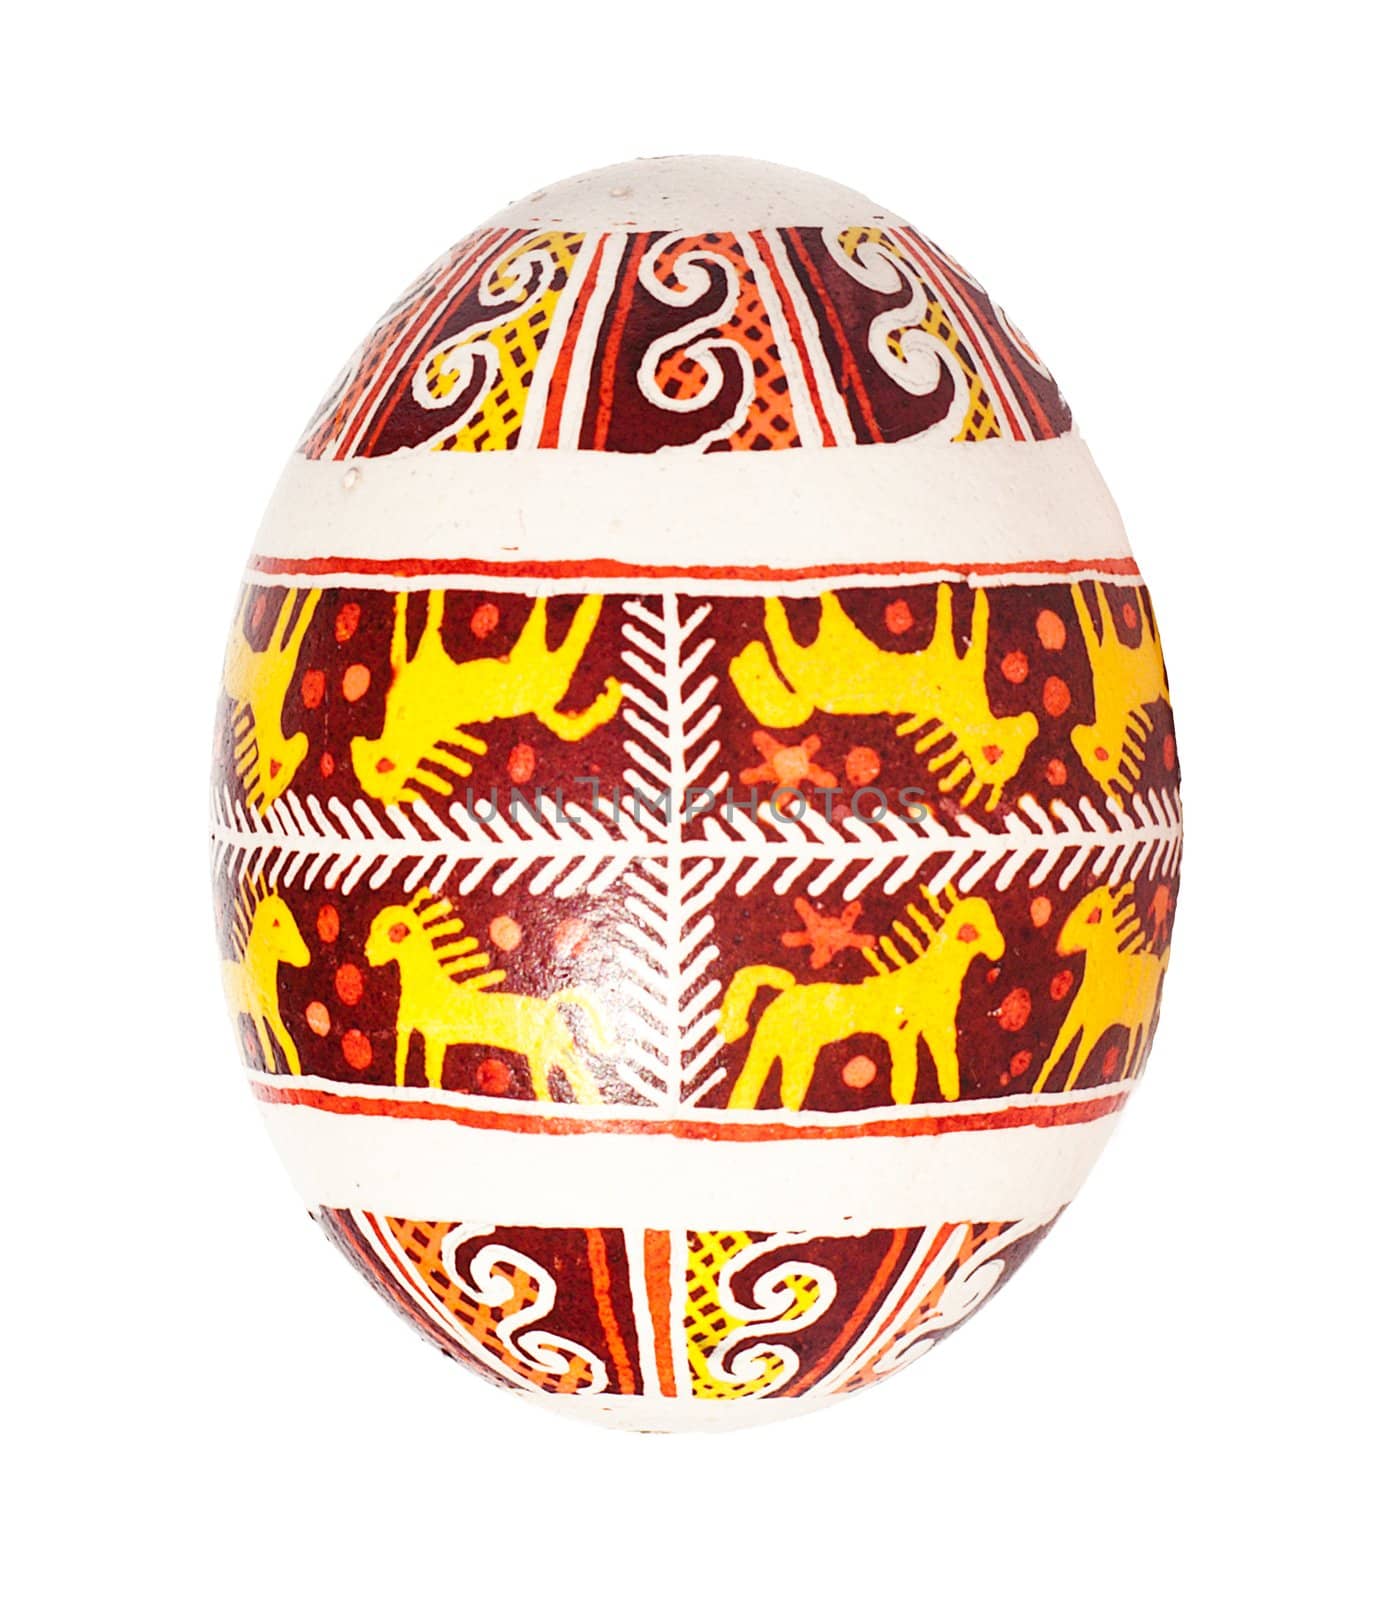 Colorful Ukrainian Easter Egg isolated on white